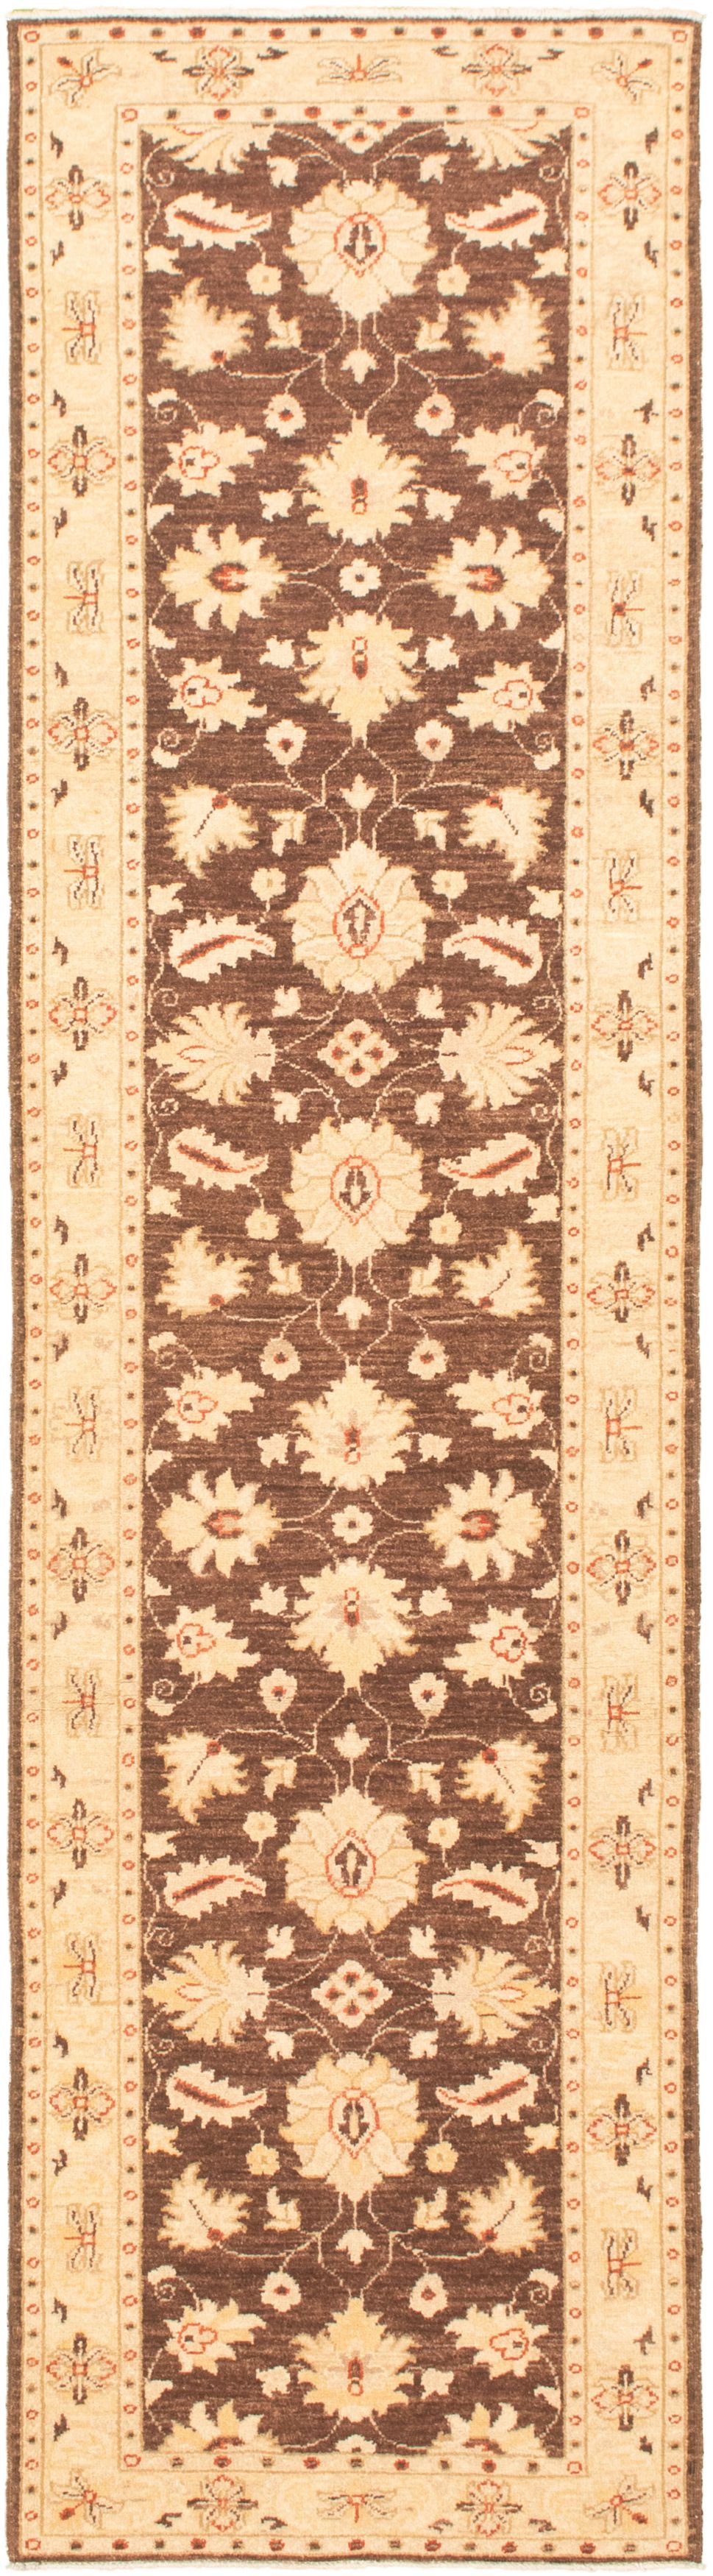 Hand-knotted Chobi Finest Dark Brown Wool Rug 2'8" x 10'3" Size: 2'8" x 10'3"  